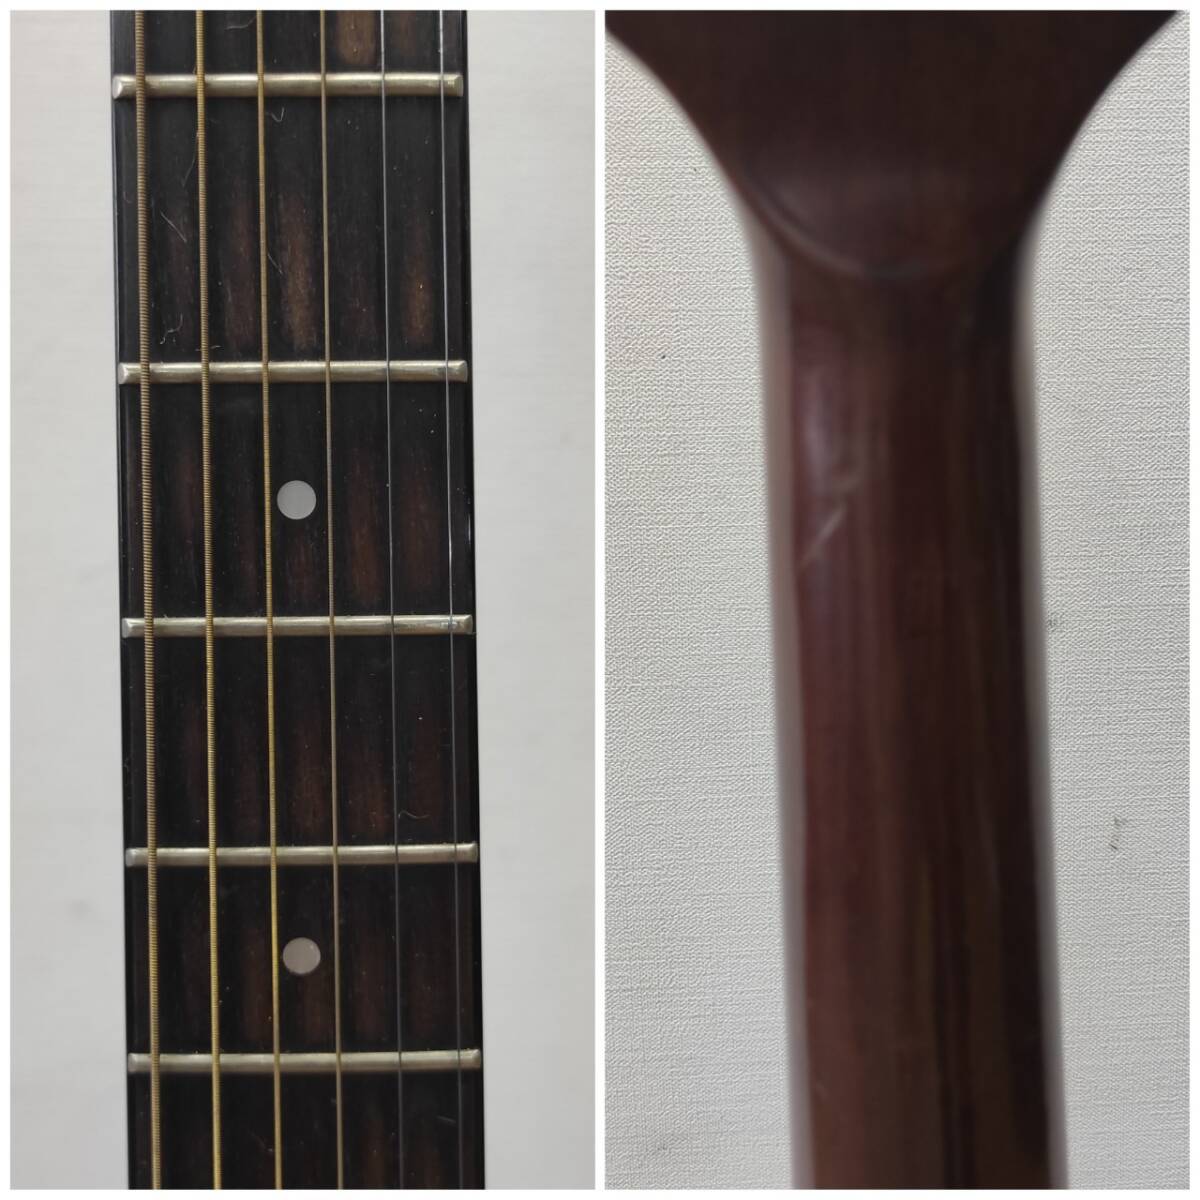 W617-K32-4147* Morris Morris WG-25 acoustic guitar akogi made in Japan case attaching 